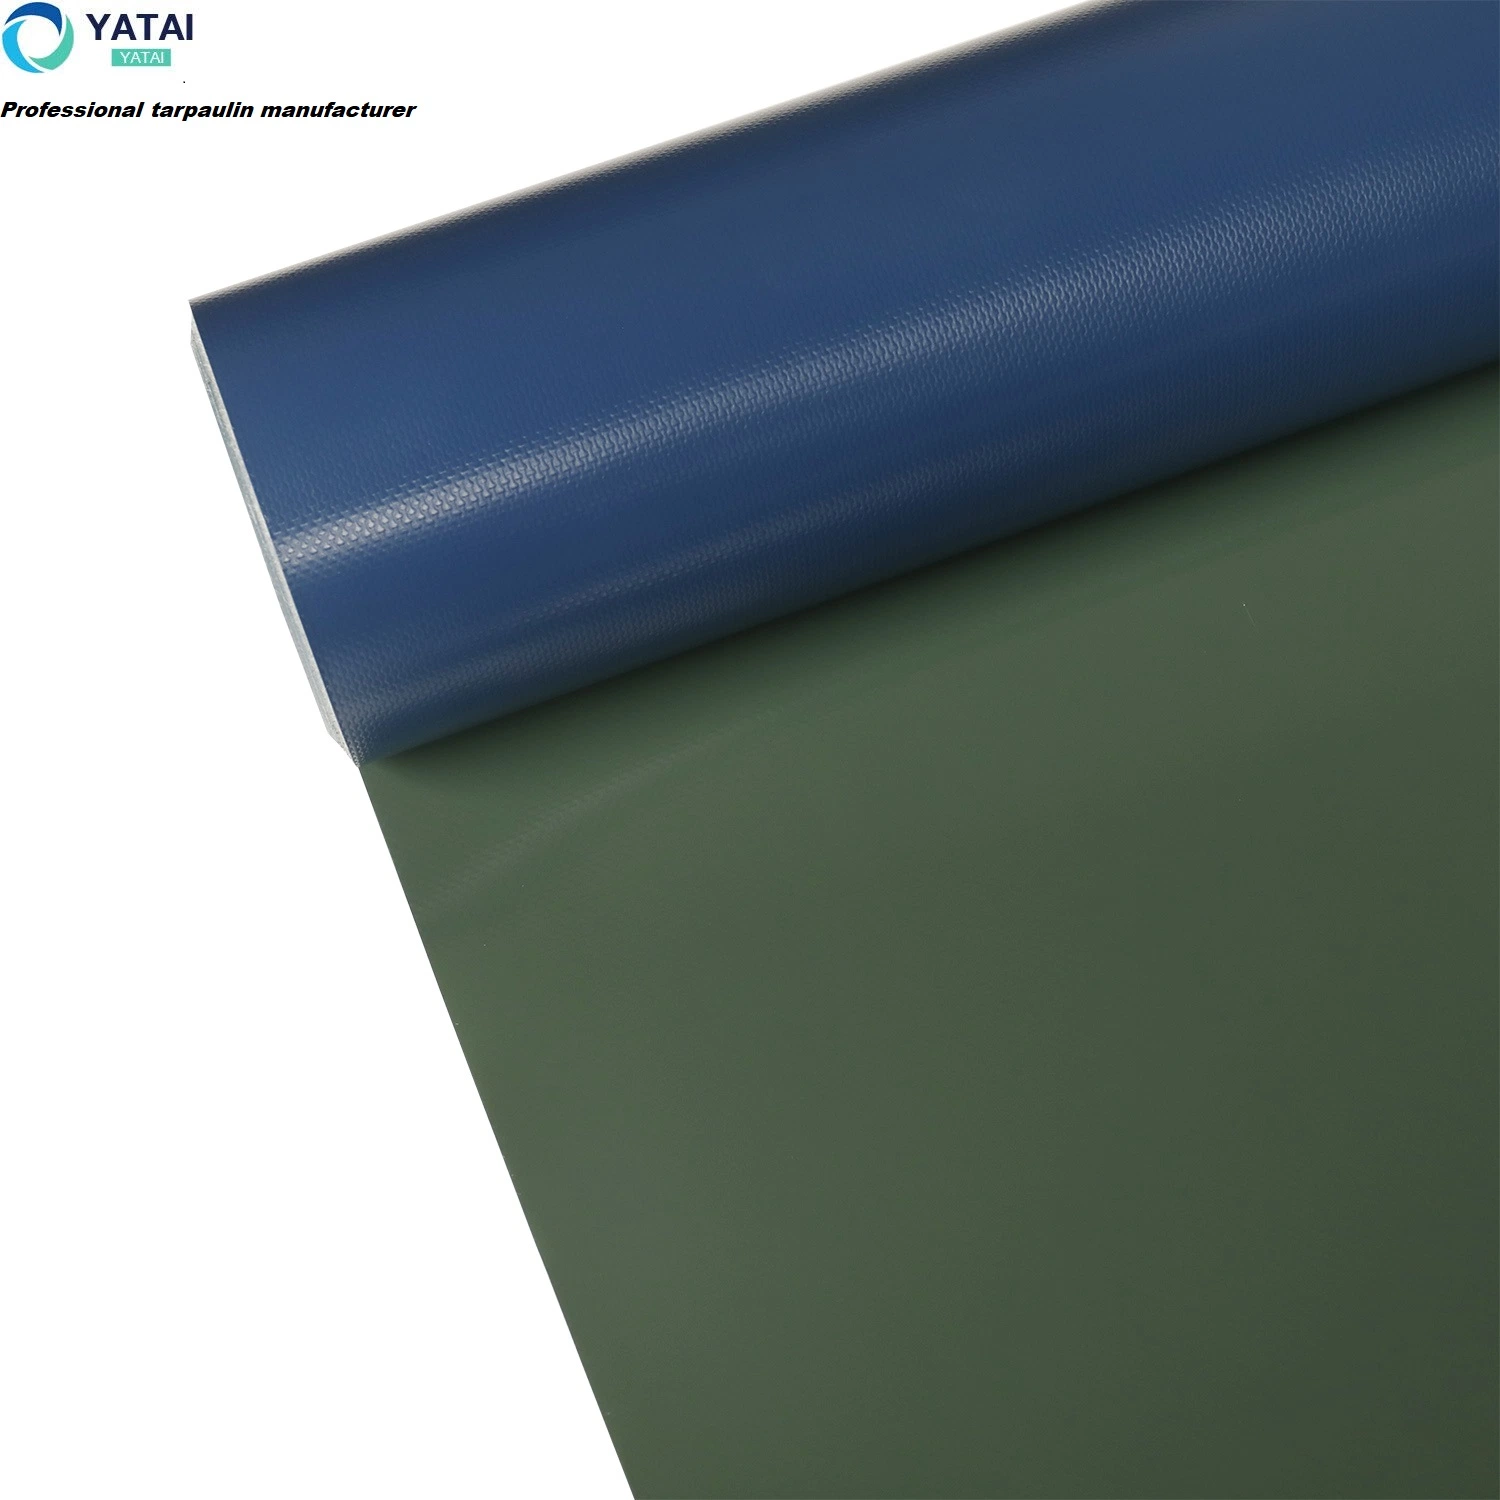 Yatai Tarpaulin Camping Tent Waterproof Vinyl Coated Polyester Material PVC Laminated Fabric